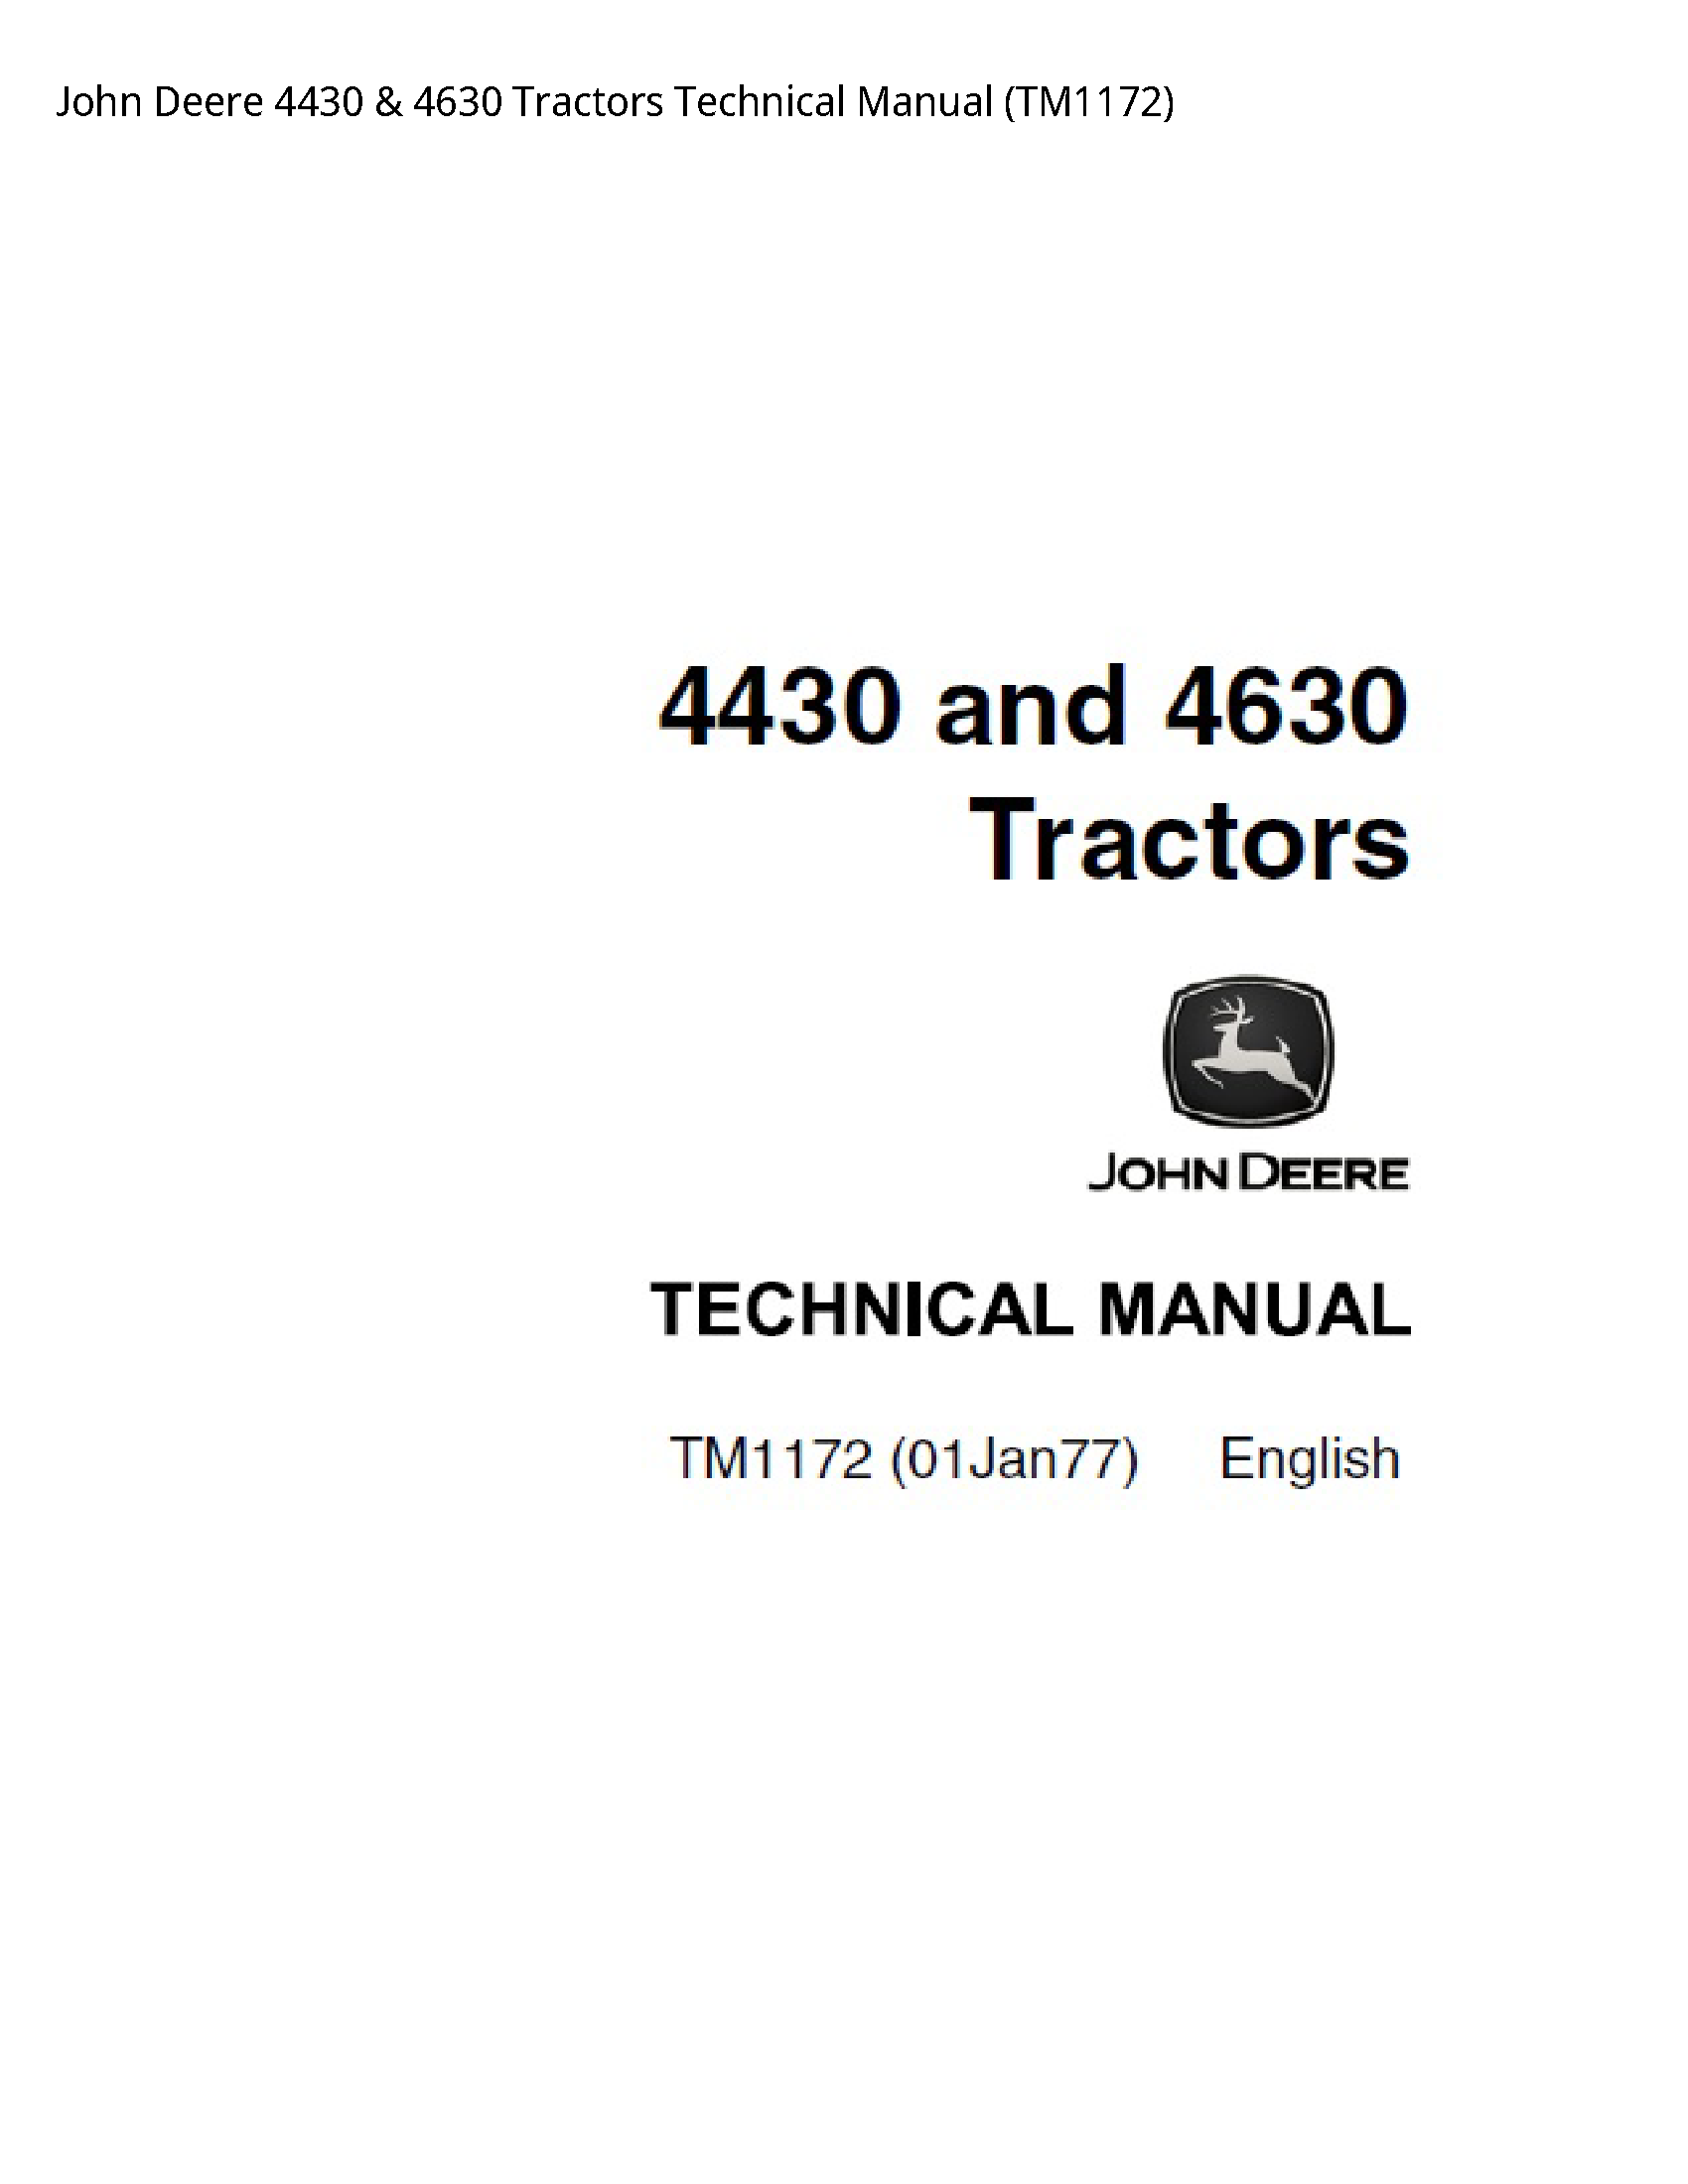 John Deere 4430 Tractors Technical manual